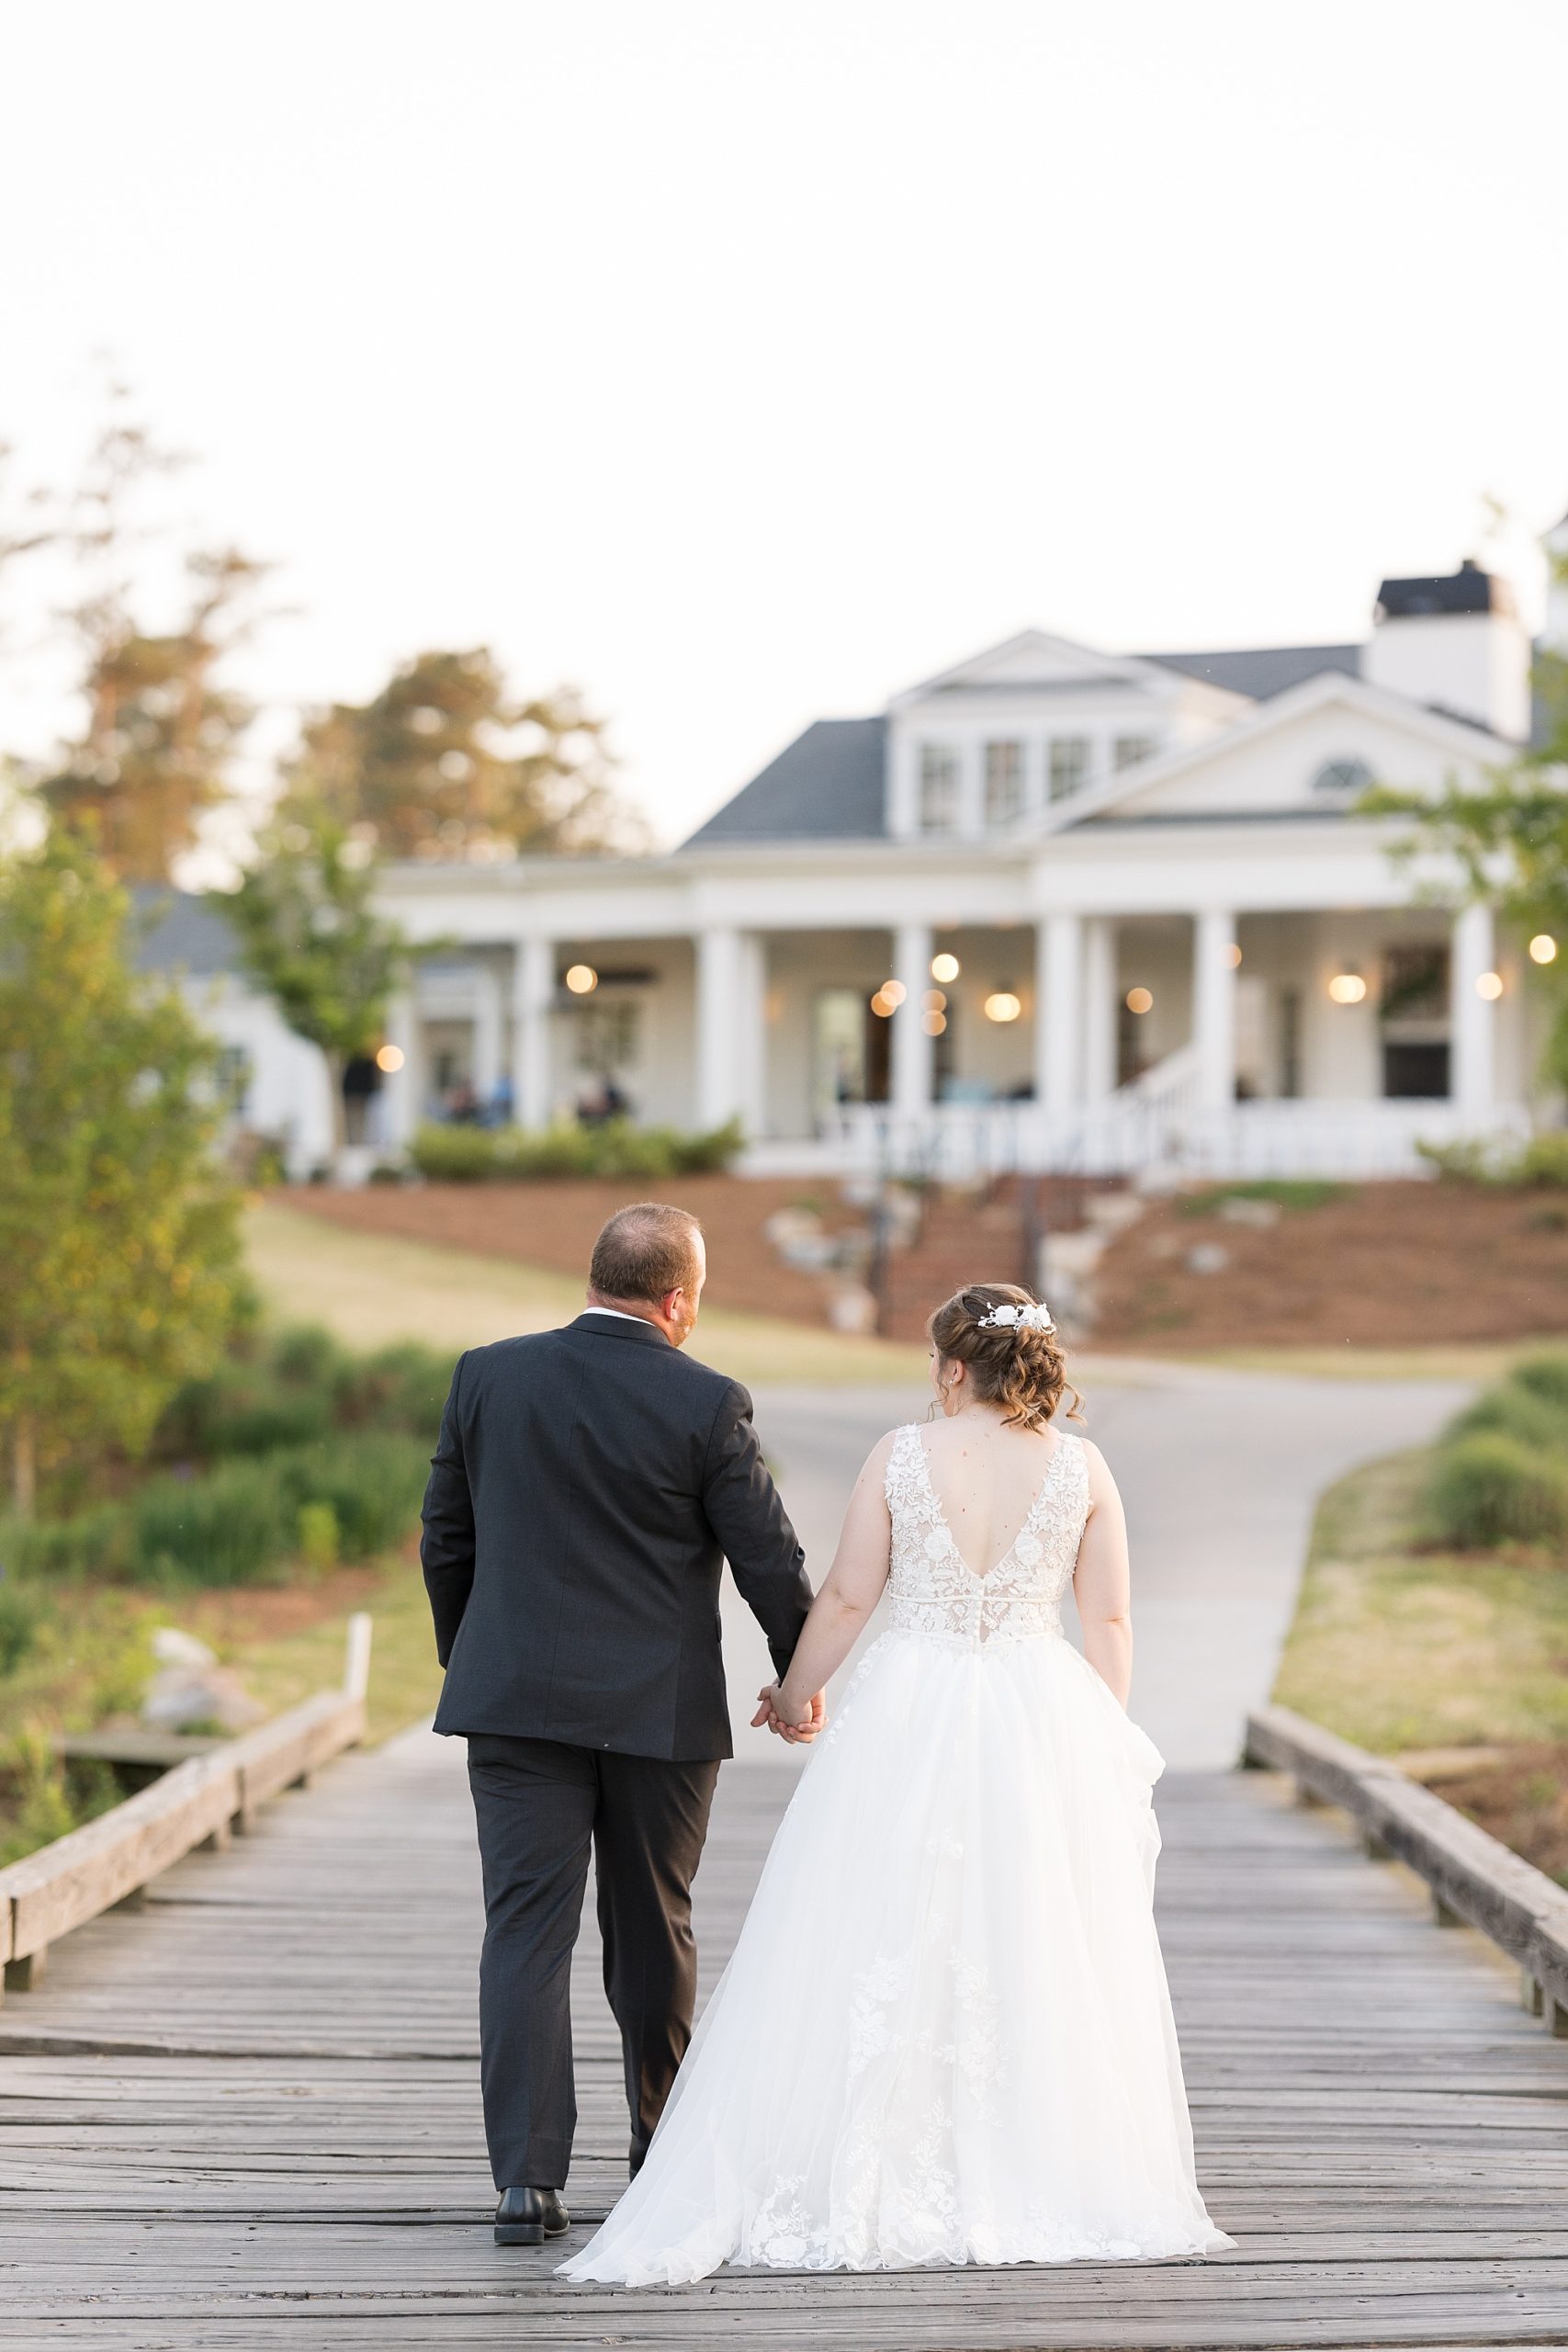 Bride and groom walking on bridge - Raleigh NC Wedding Photographer - Sarah Hinckley Photography